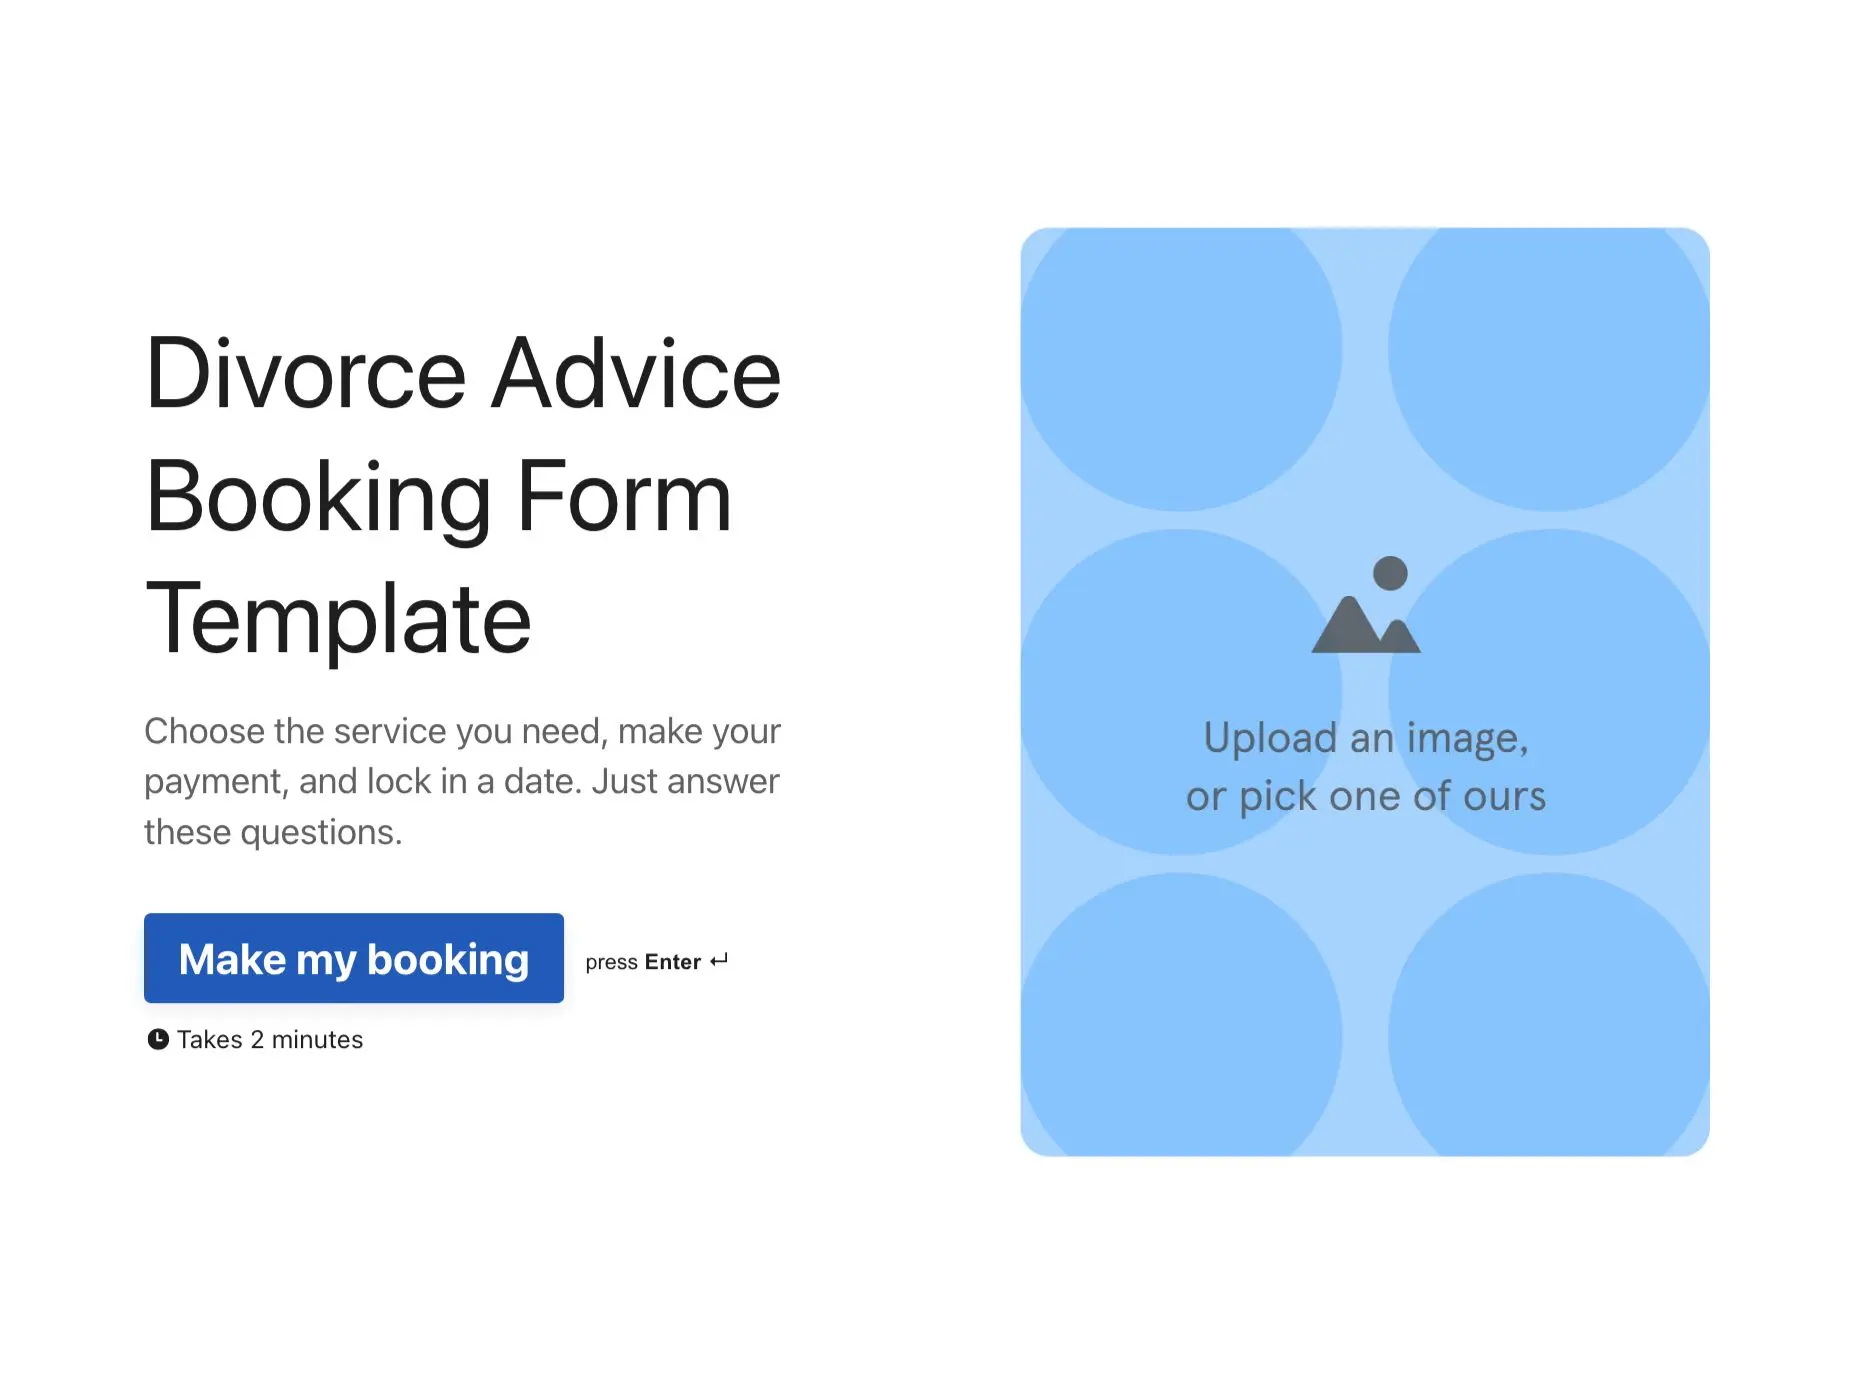 Divorce Advice Booking Form Template Hero